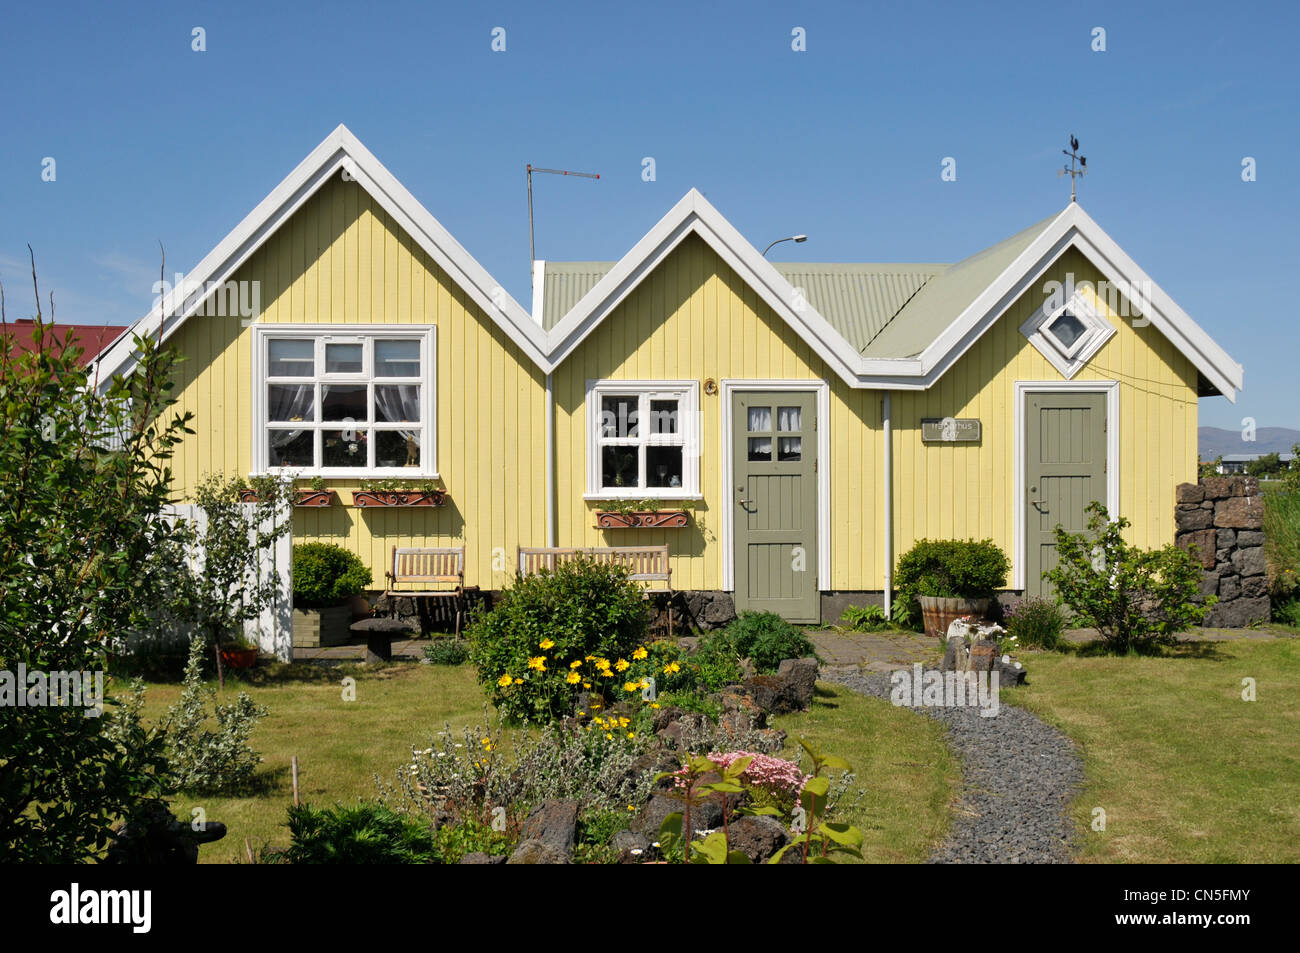 Iceland, Sudurland Region, Eyrarbakki, traditional houses Stock Photo